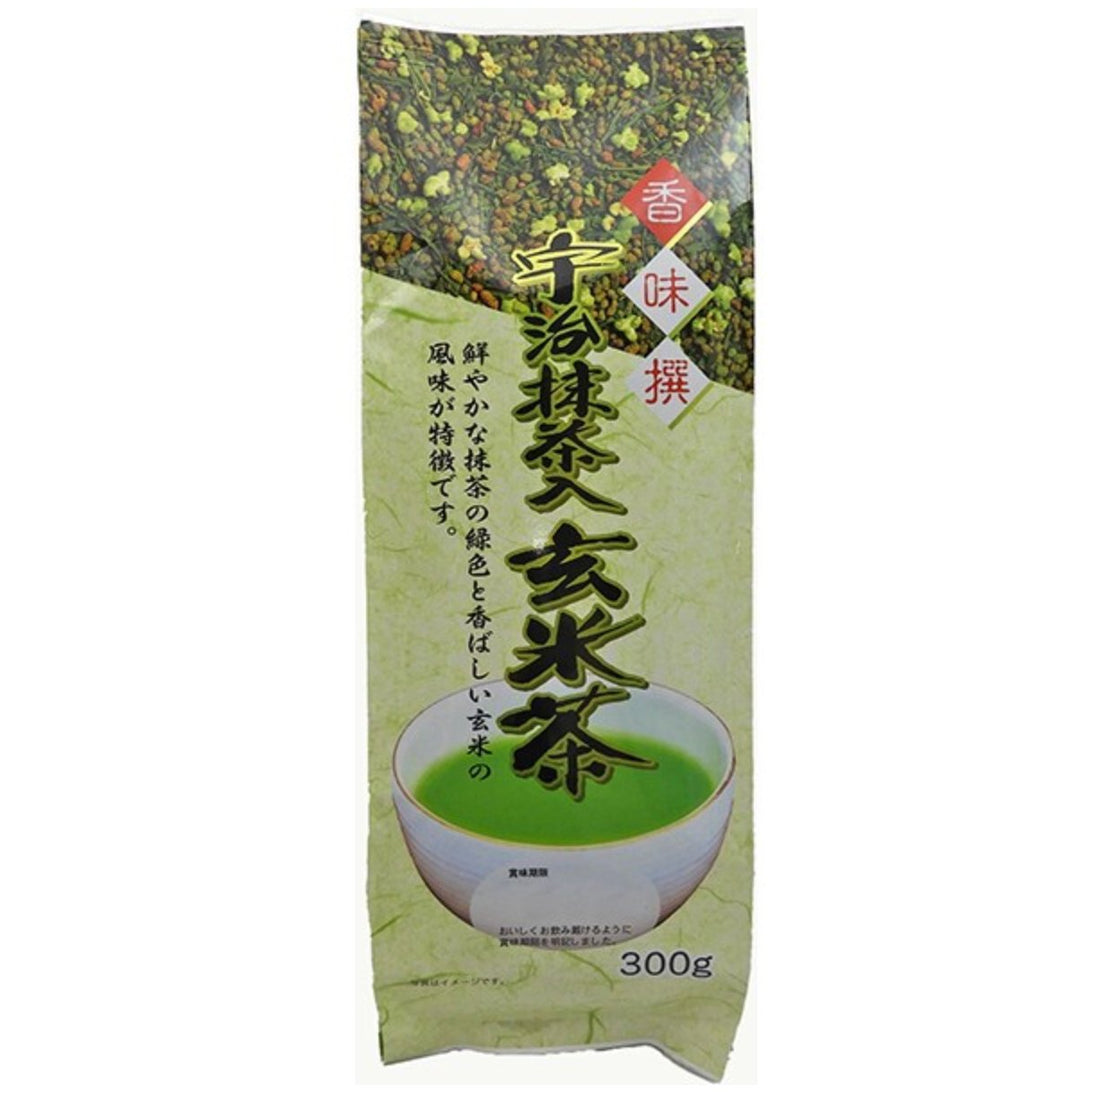 Oigawa Tea Garden Flavor Collection Uji Matcha Genmaicha 300g - NihonMura